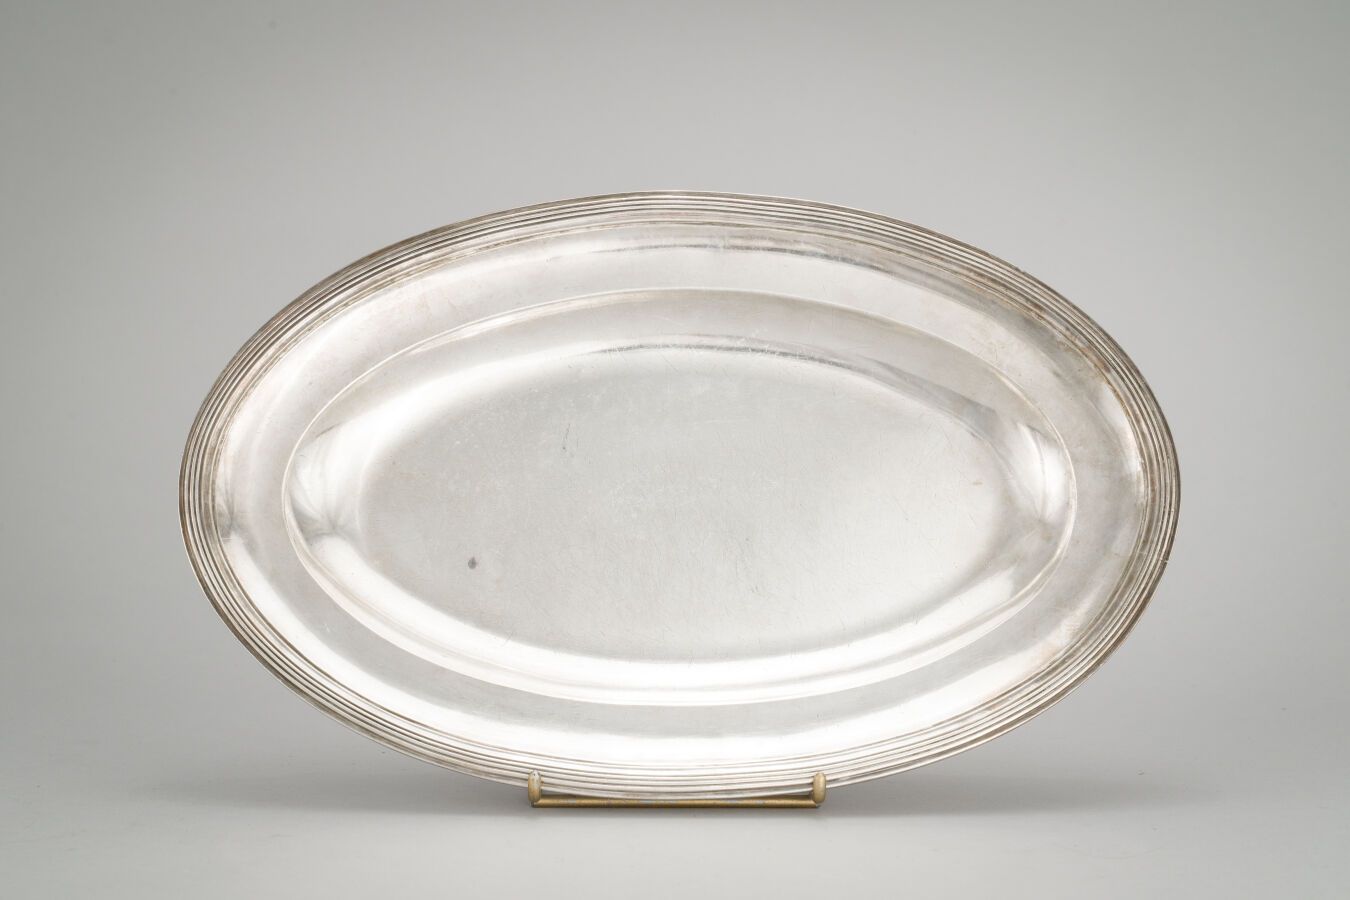 Null 97.银质椭圆盘（950/1000），边缘有鱼鳞。

巴黎1798-1809年。

(划痕)。

重量：779克 - 长：35.5厘米